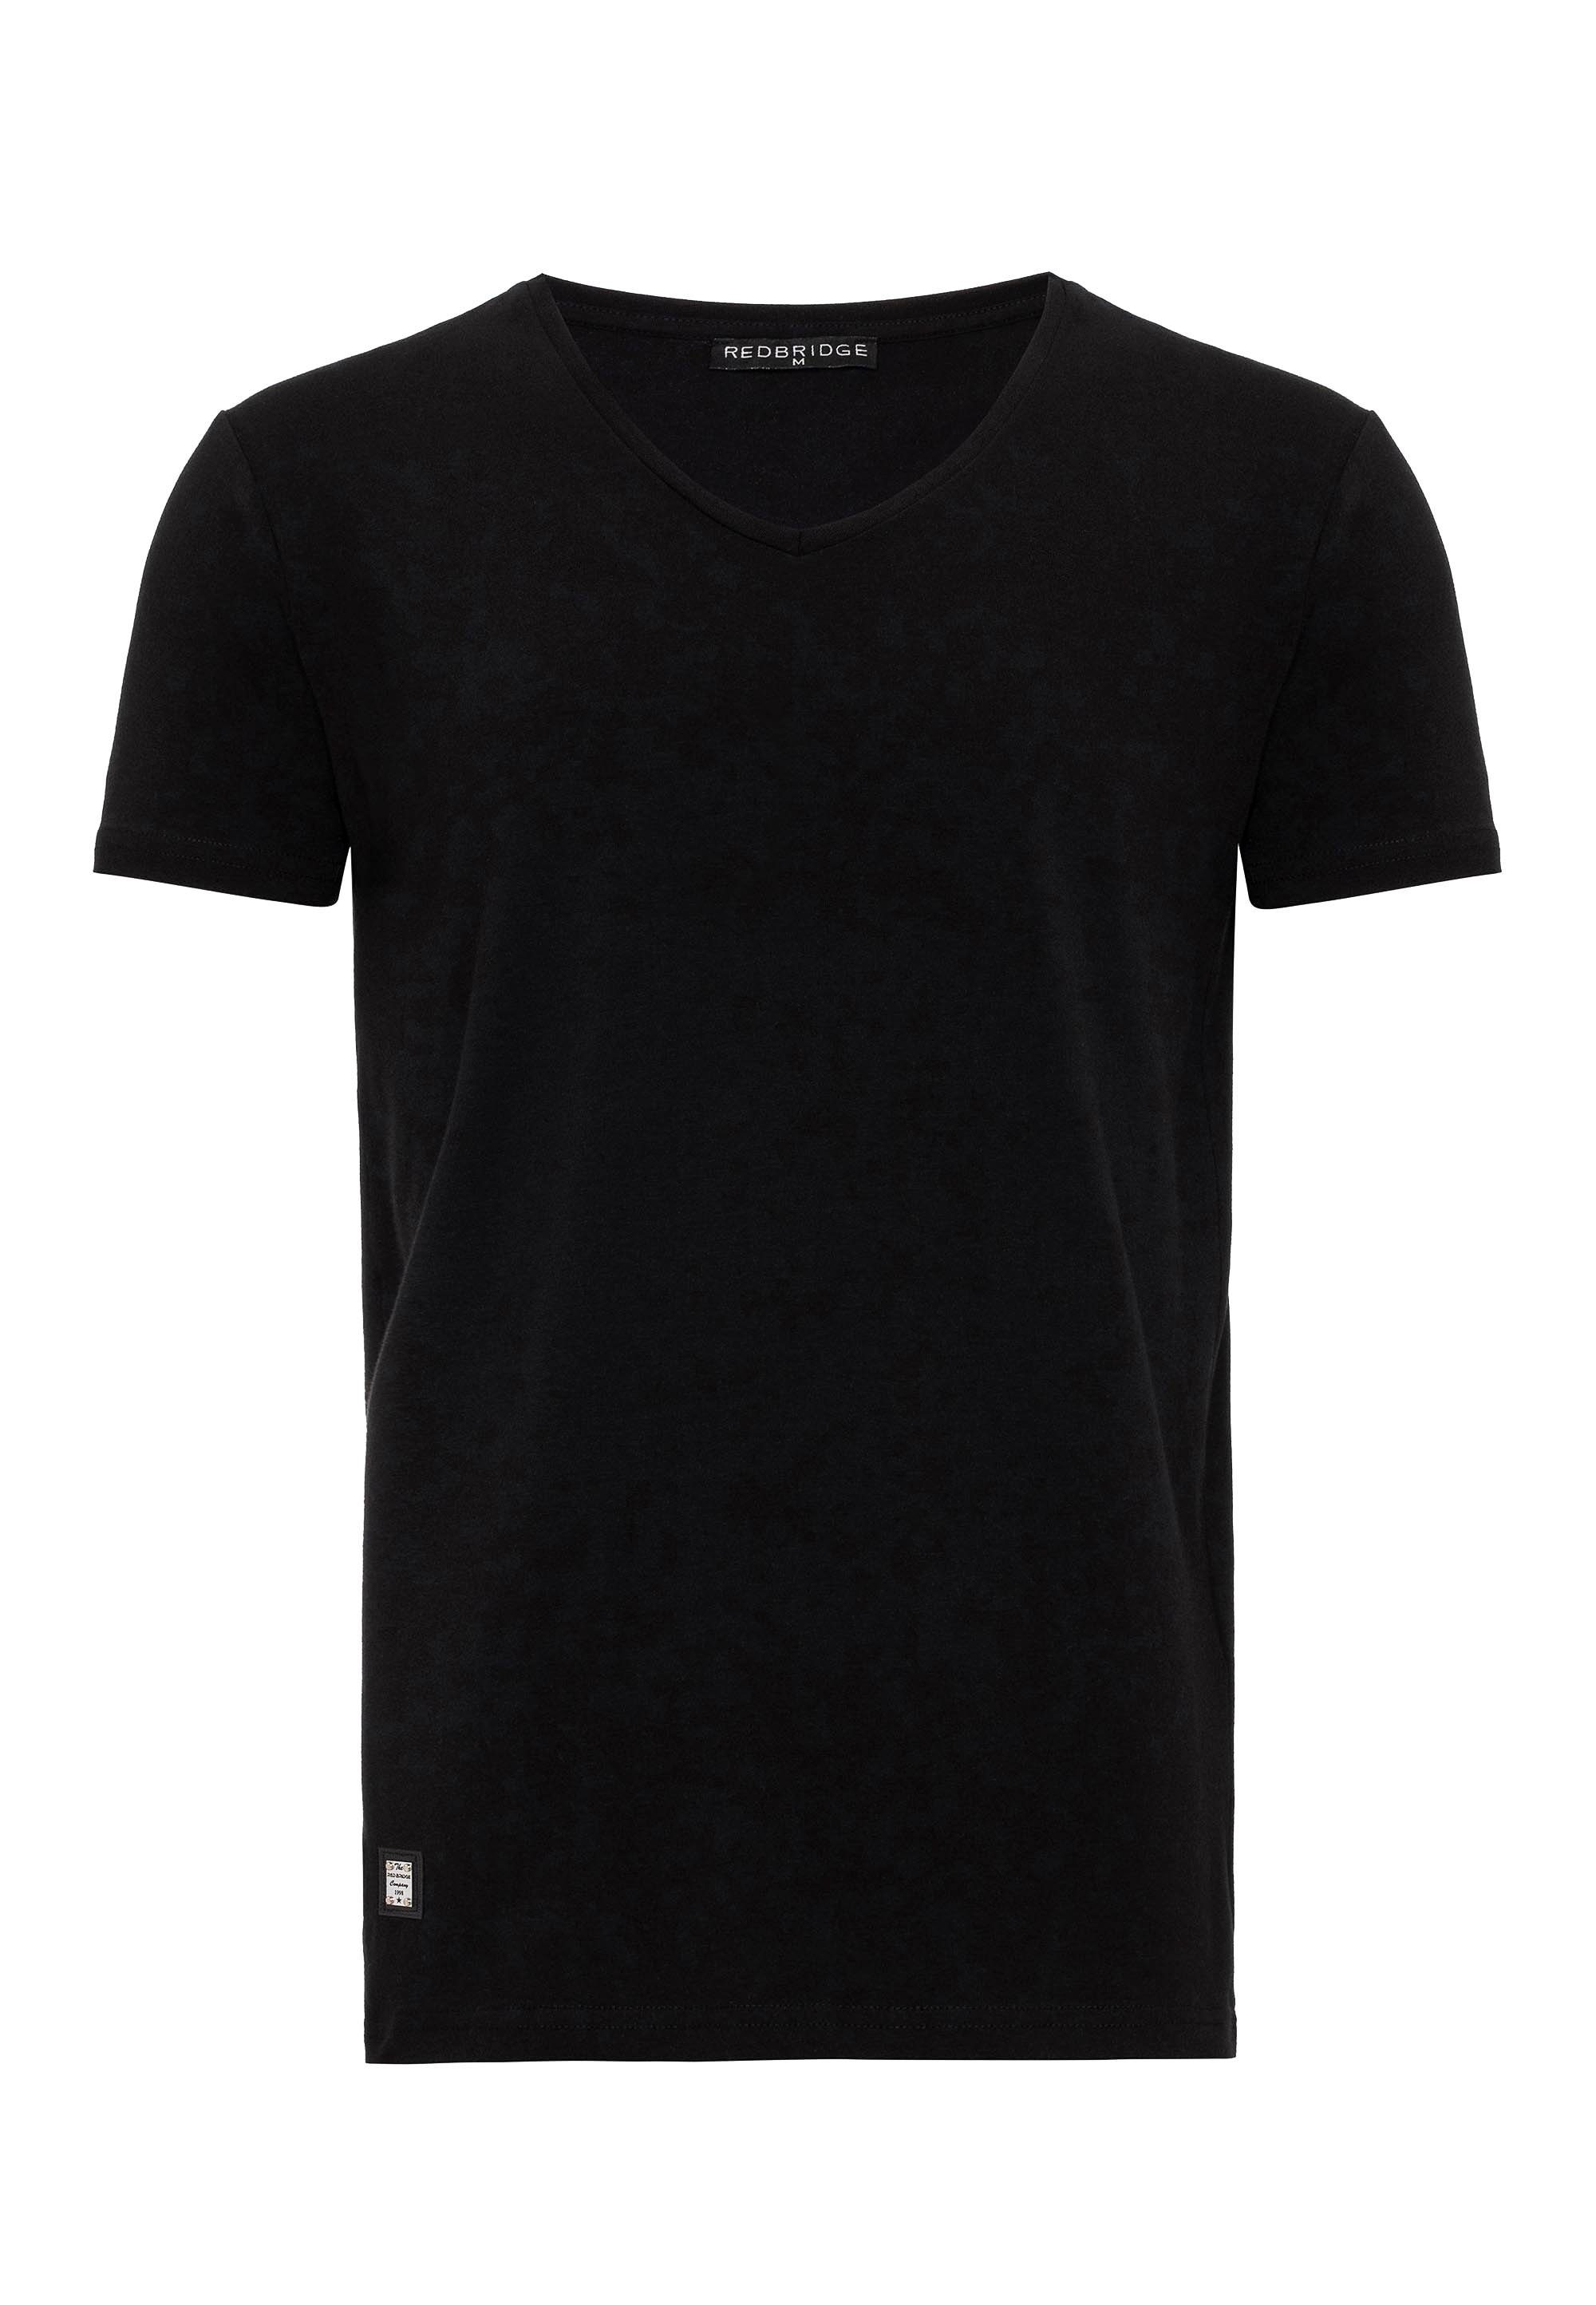 Fullerton aus Logopatch T-Shirt schwarz mit Metall basic RedBridge